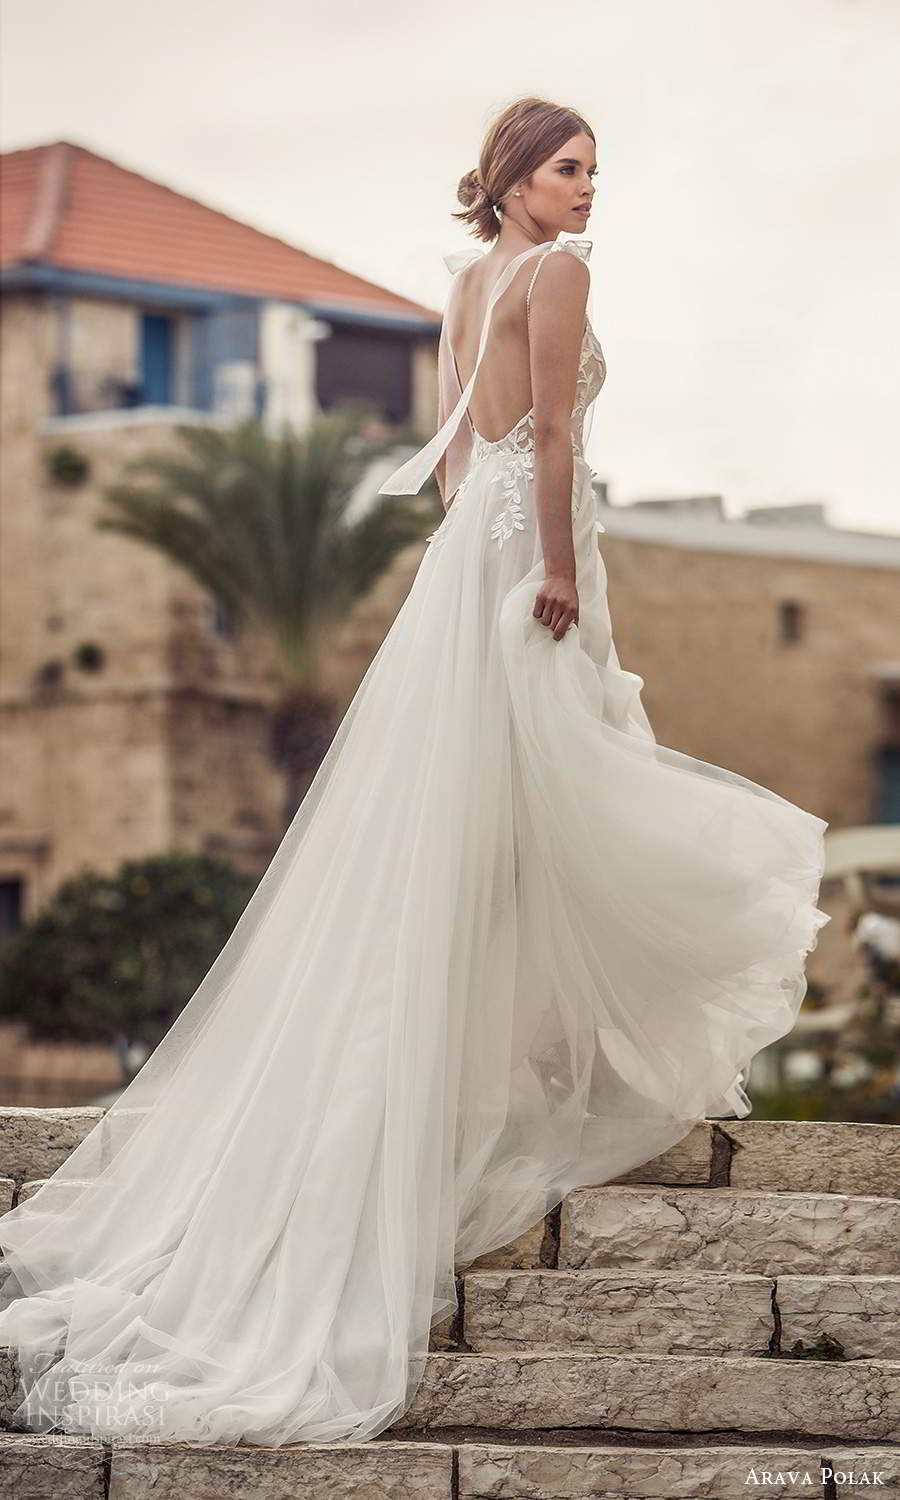 arava polak 2021 bridal sleeveless thin straps sweetheart neckline embellished bodice a line ball gown wedding dress chapel train (8) bv